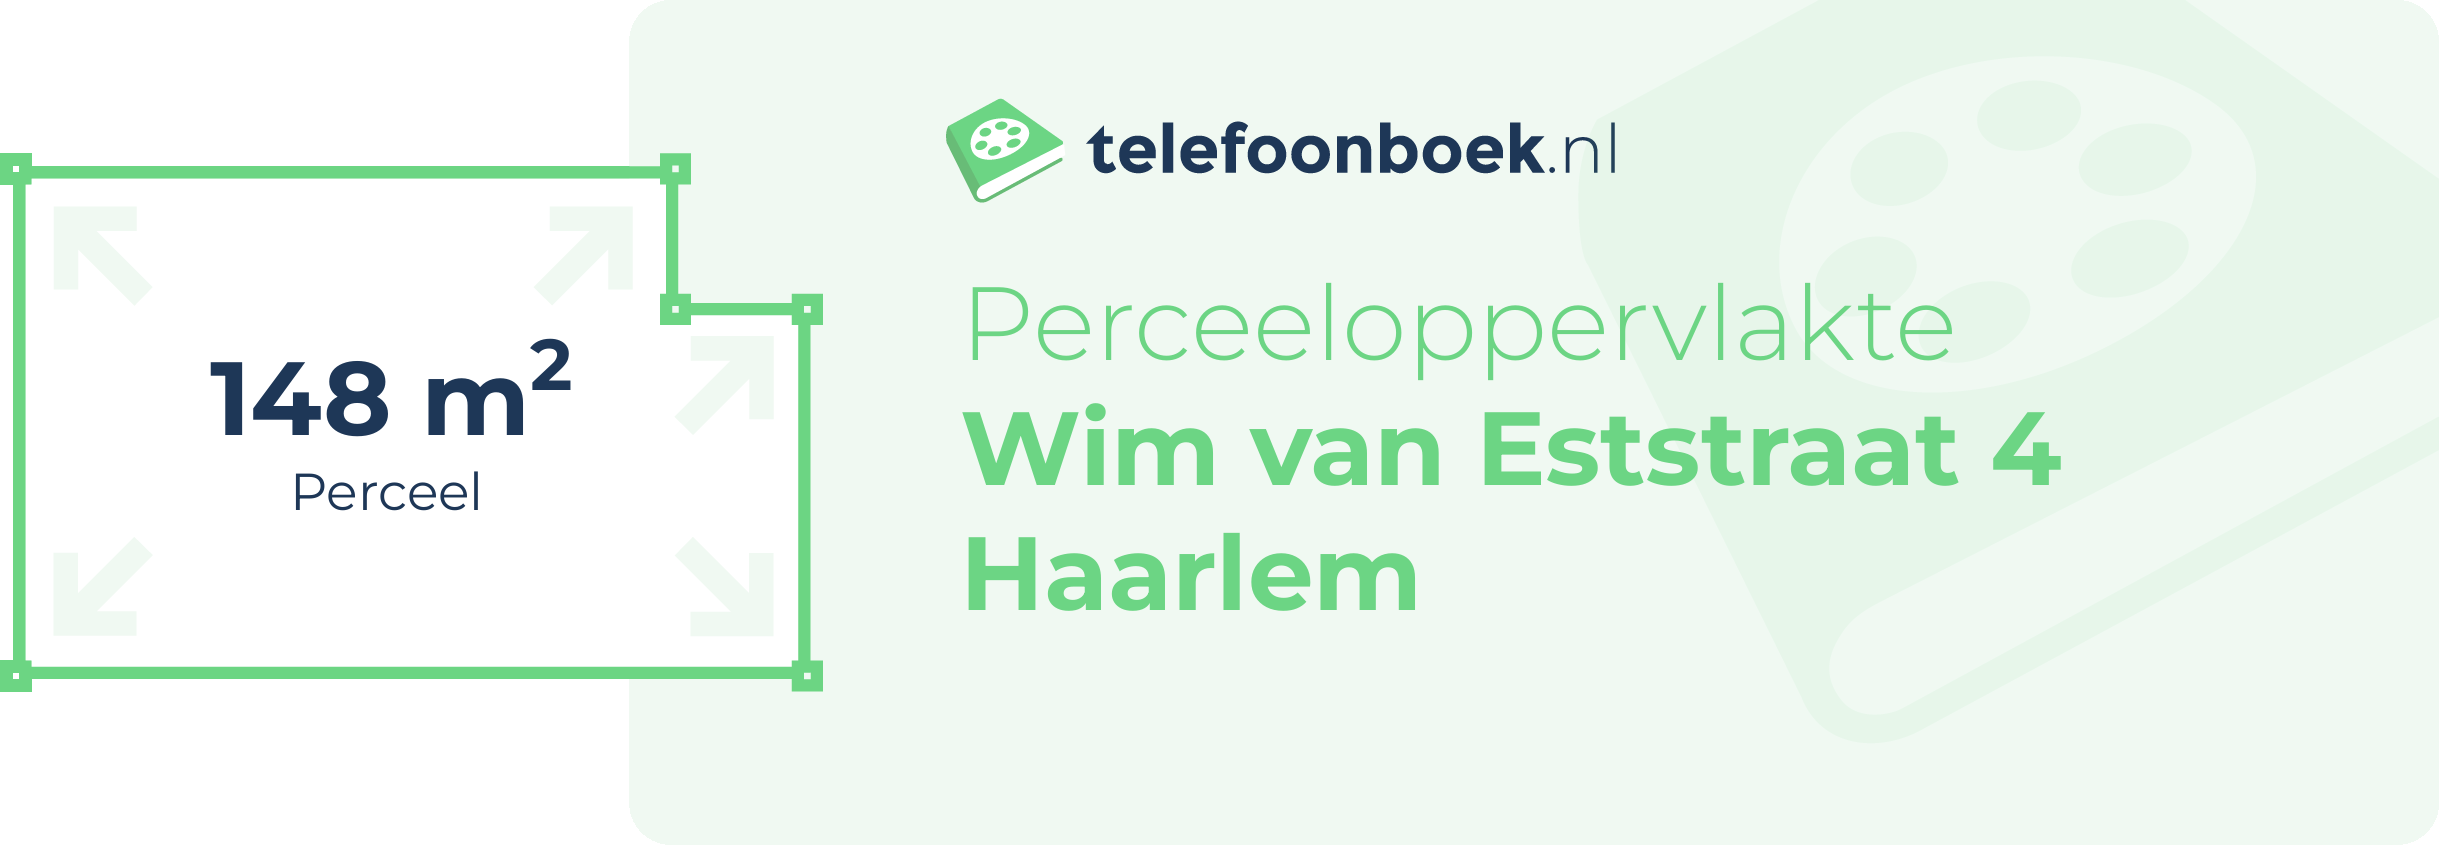 Perceeloppervlakte Wim Van Eststraat 4 Haarlem